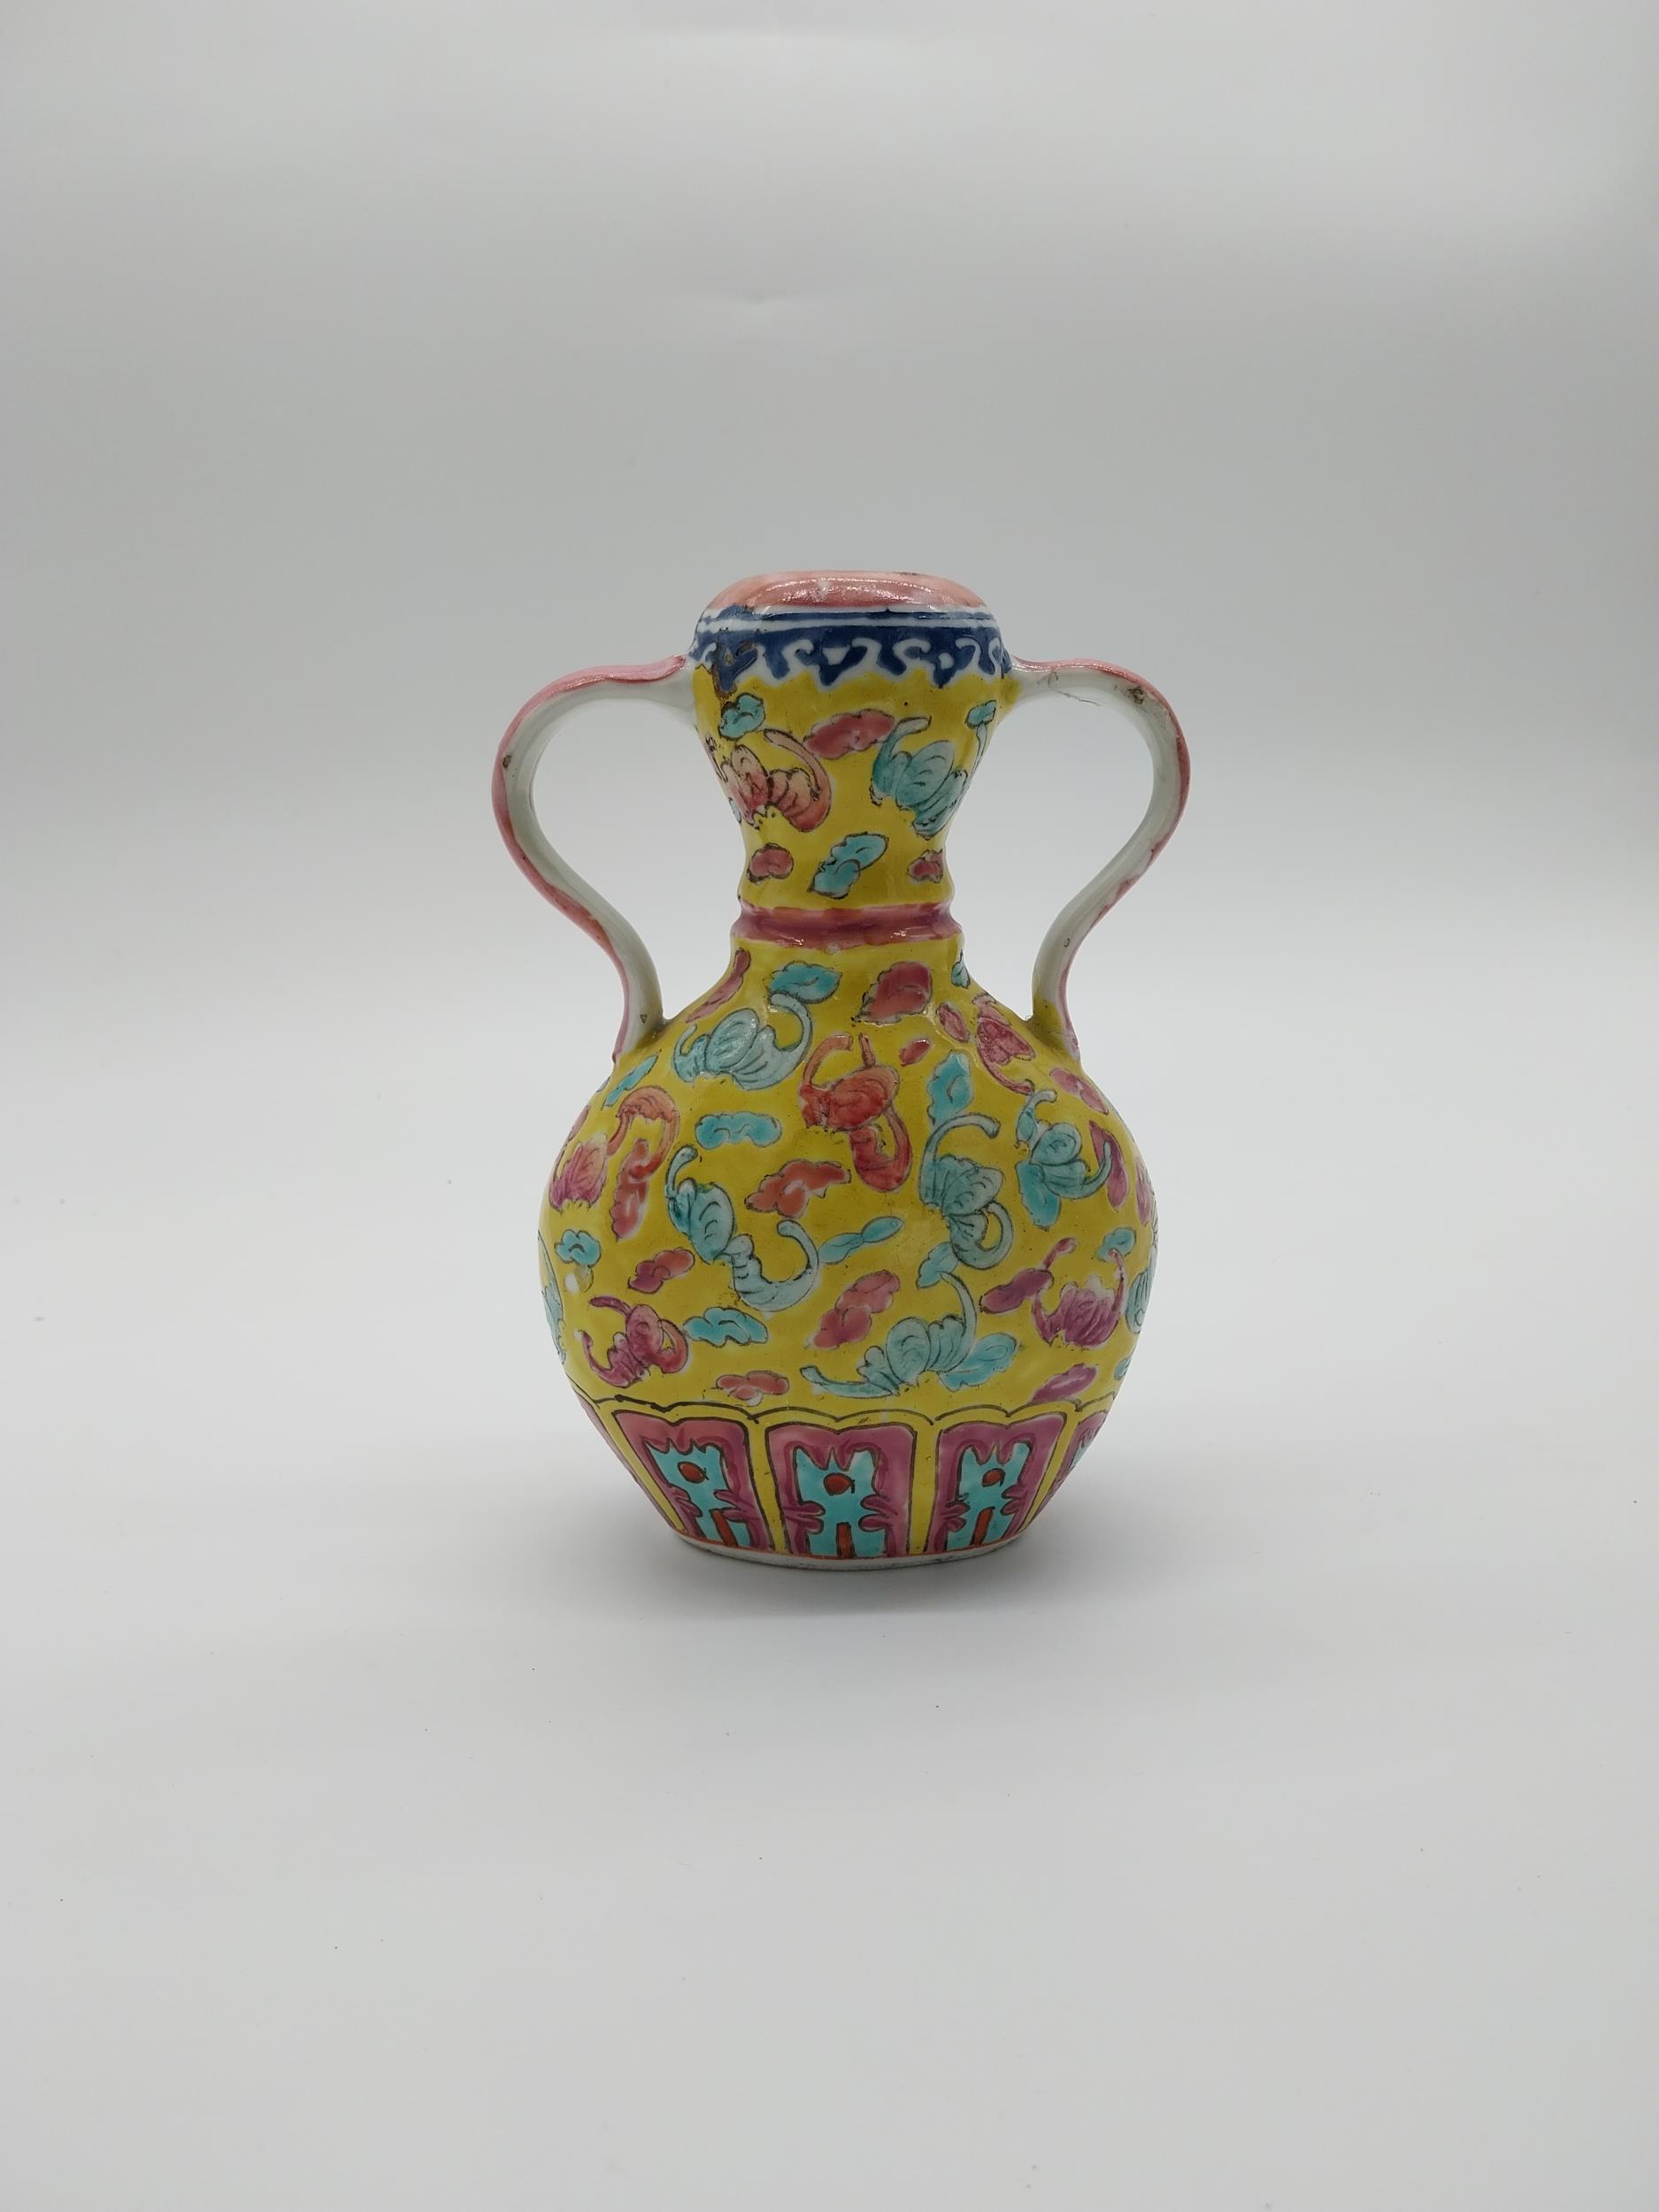 Chinese ceramic two handled vase. {20 cm H x 14 cm W x 8 cm D}.